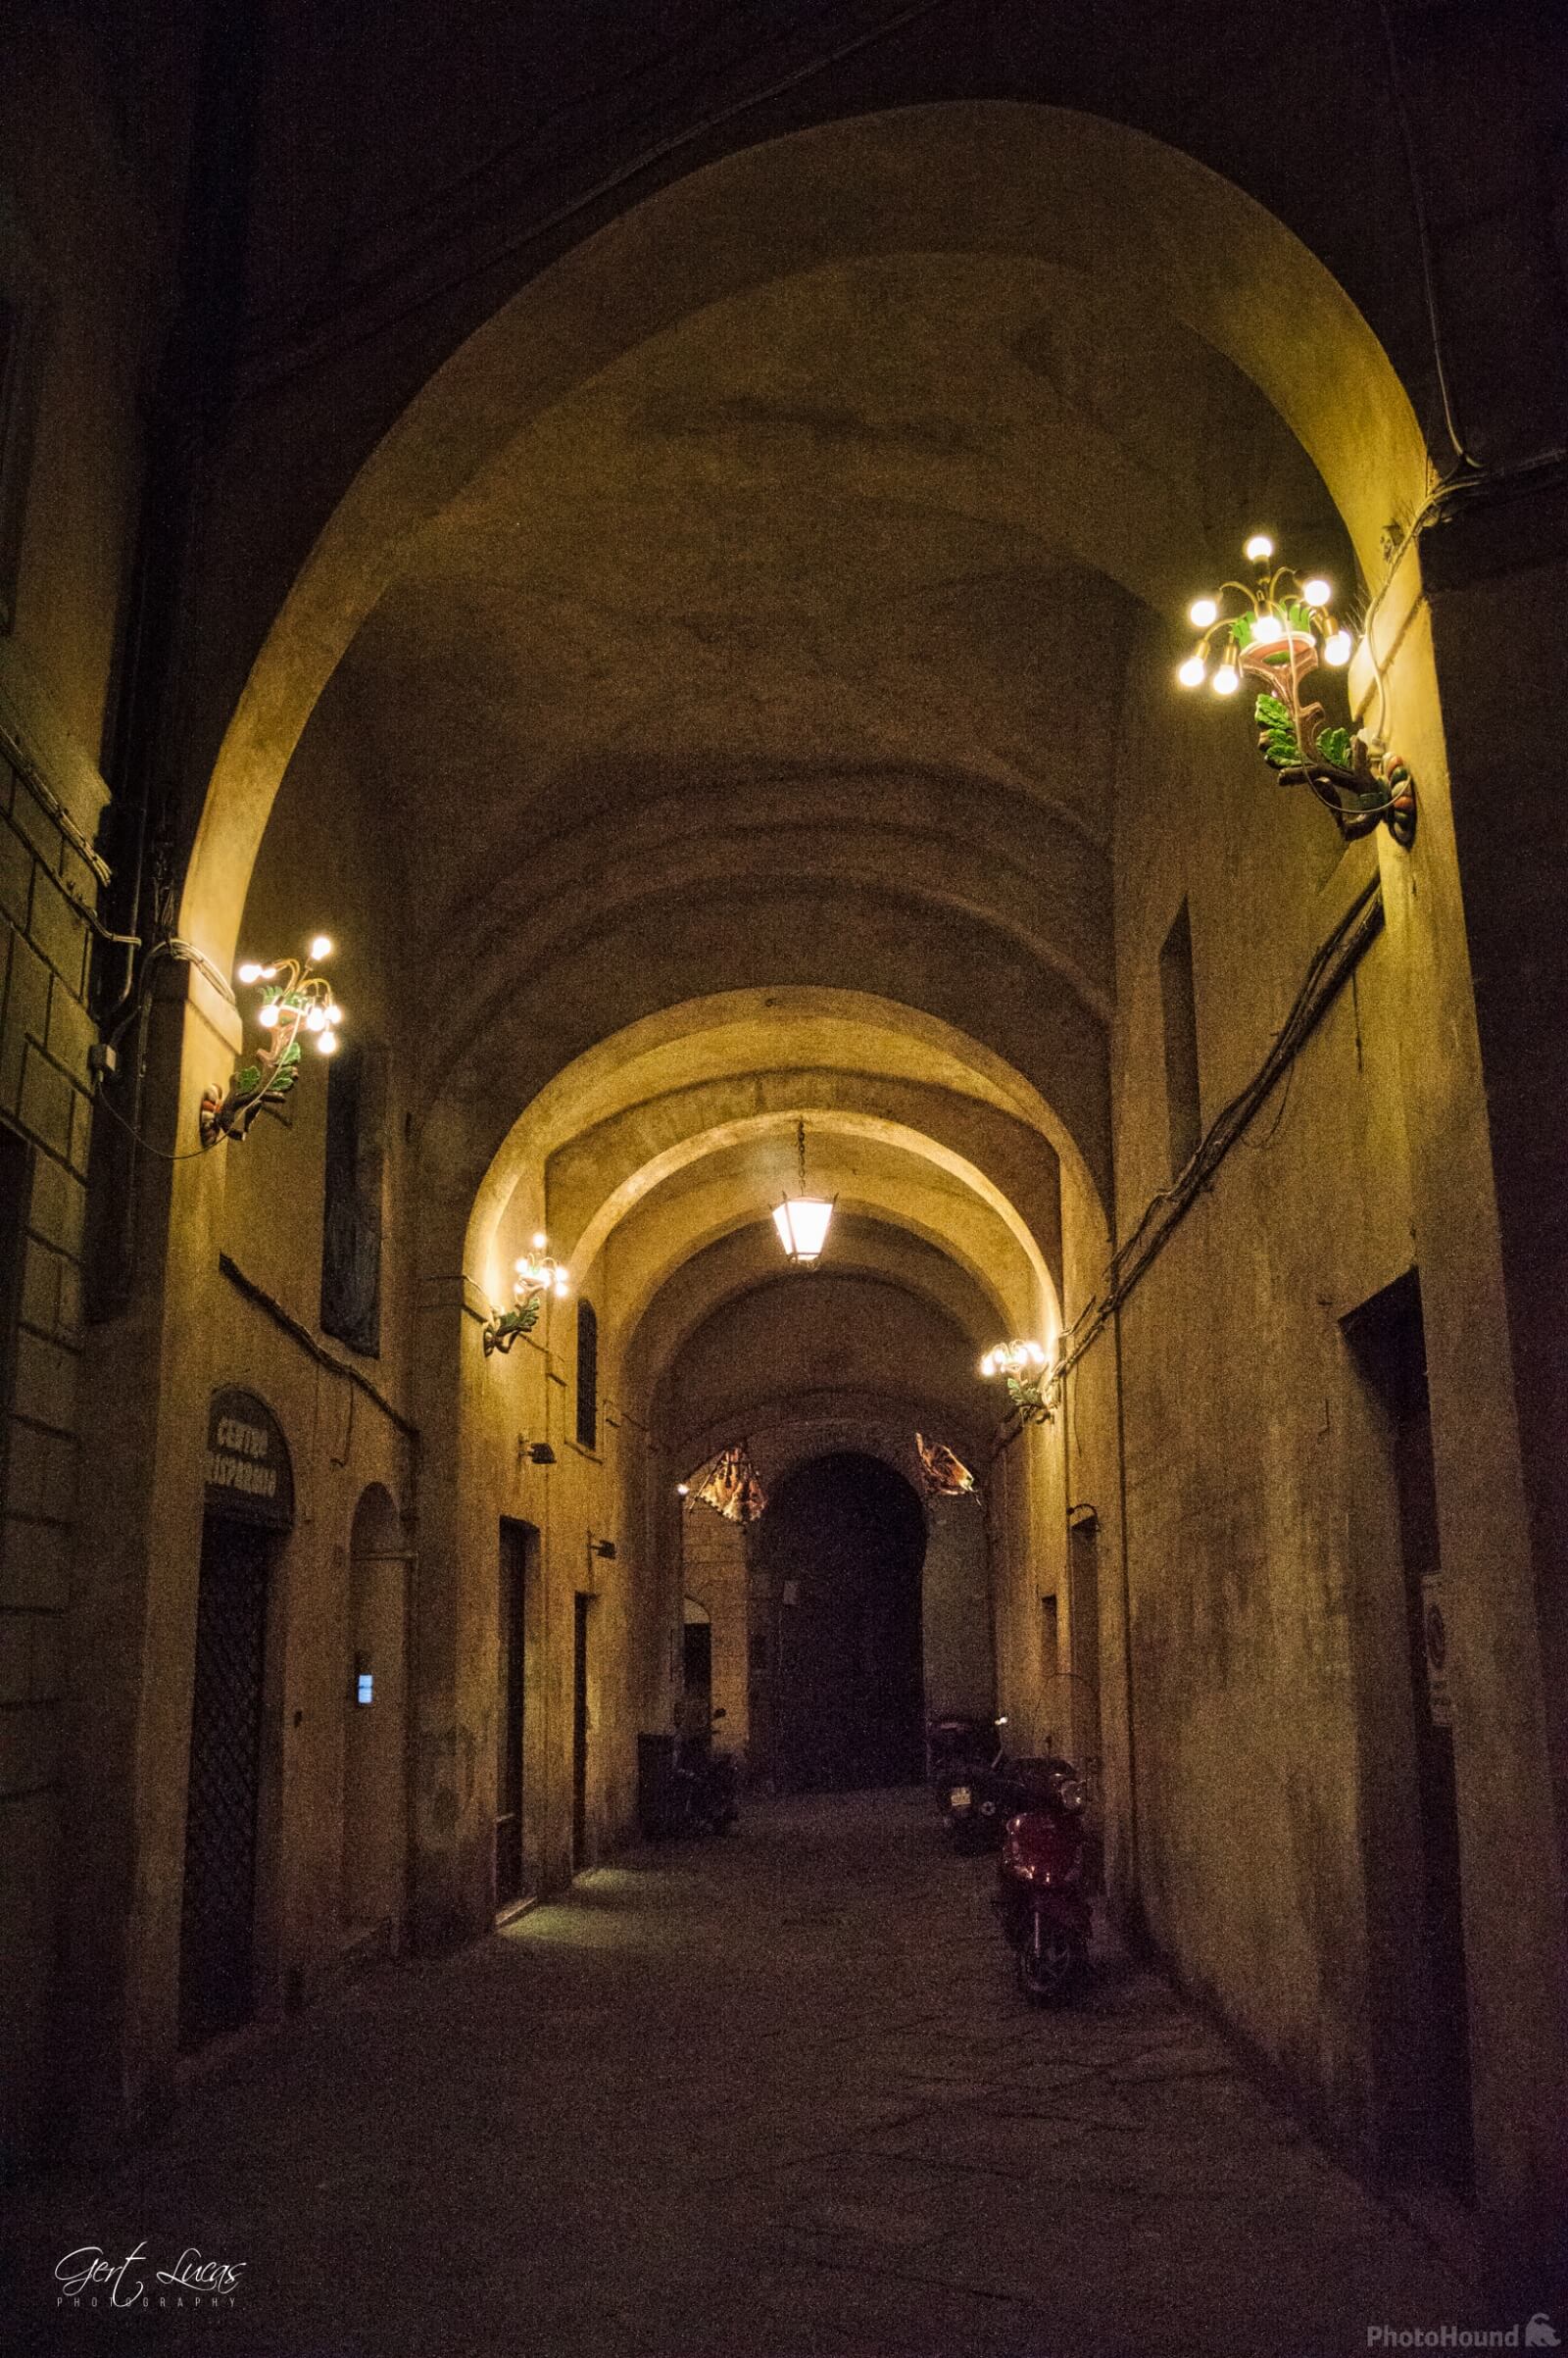 Image of Via da Citta, Siena by Gert Lucas